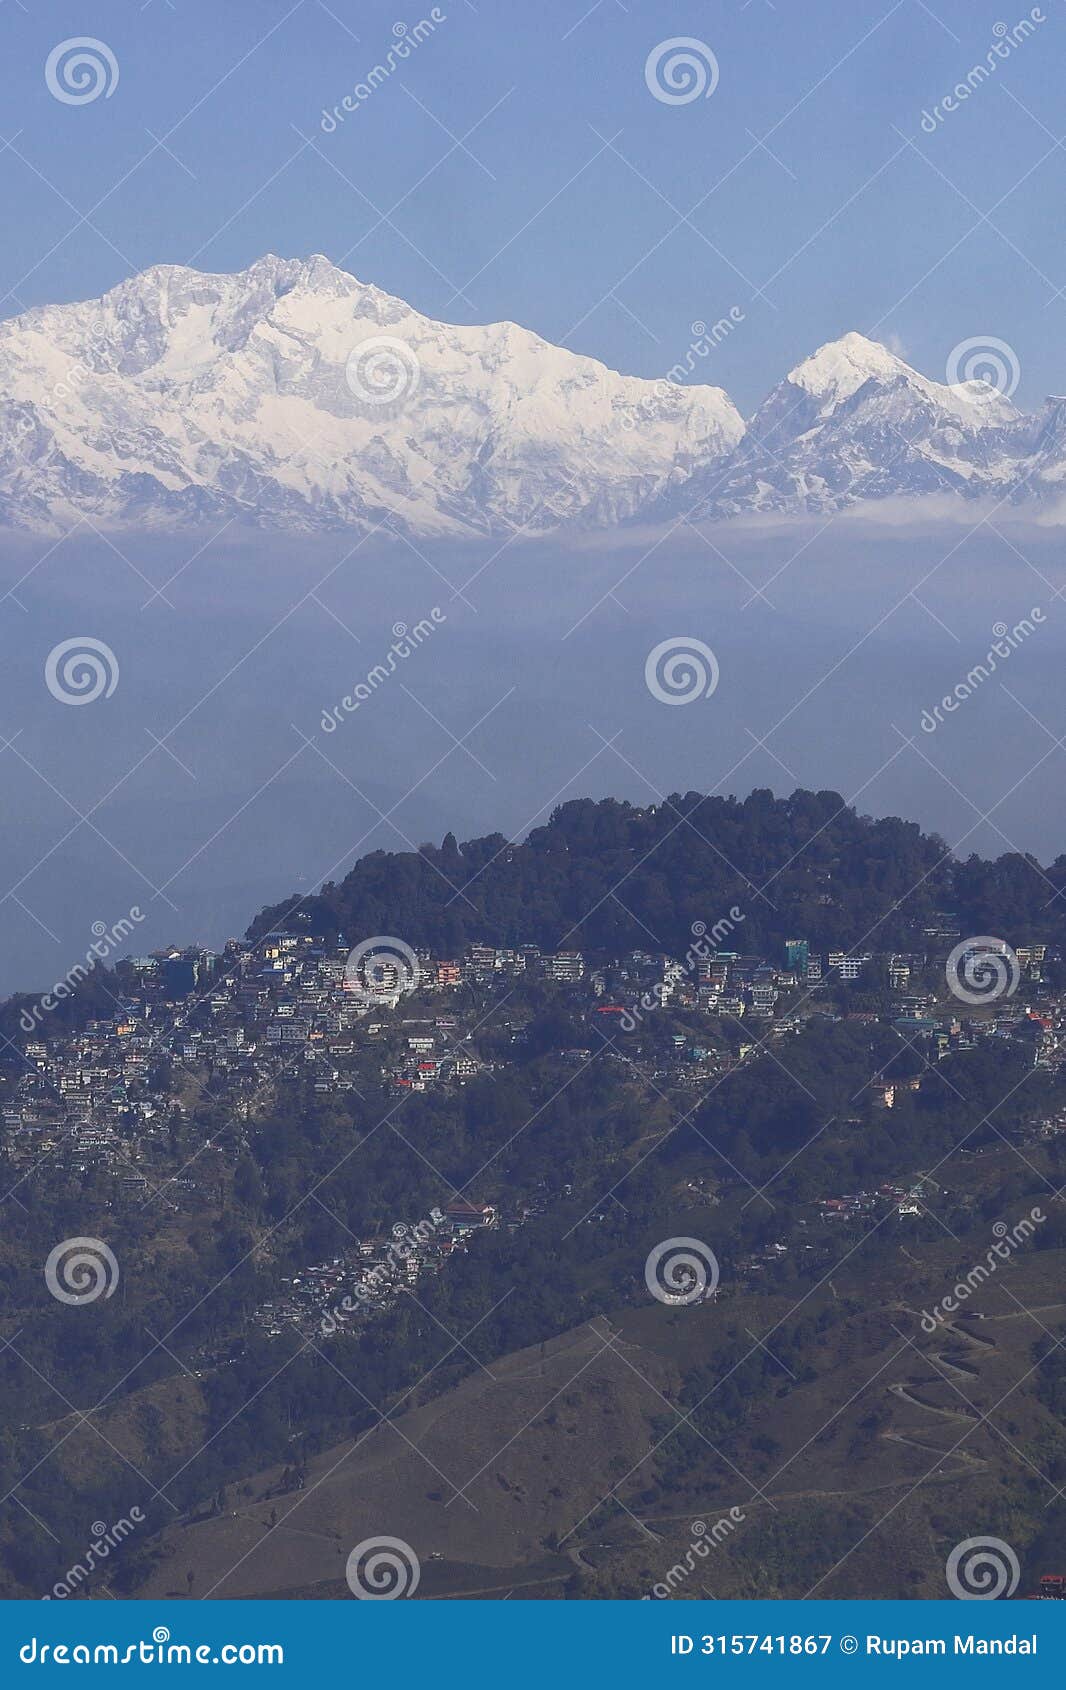 panorama of beautiful darjeeling hill station and snowcapped mount kangchenjunga